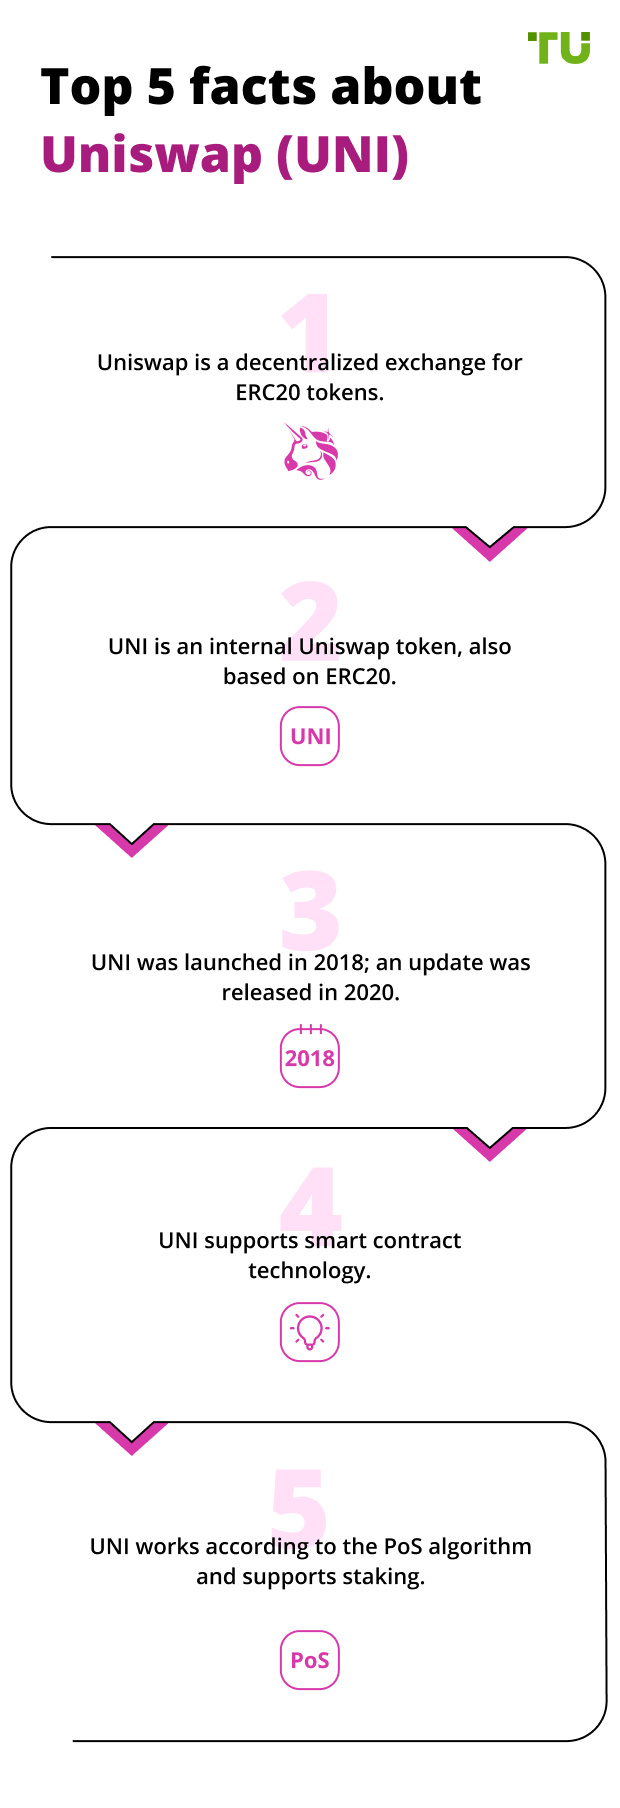 Top 5 facts about Uniswap (UNI)